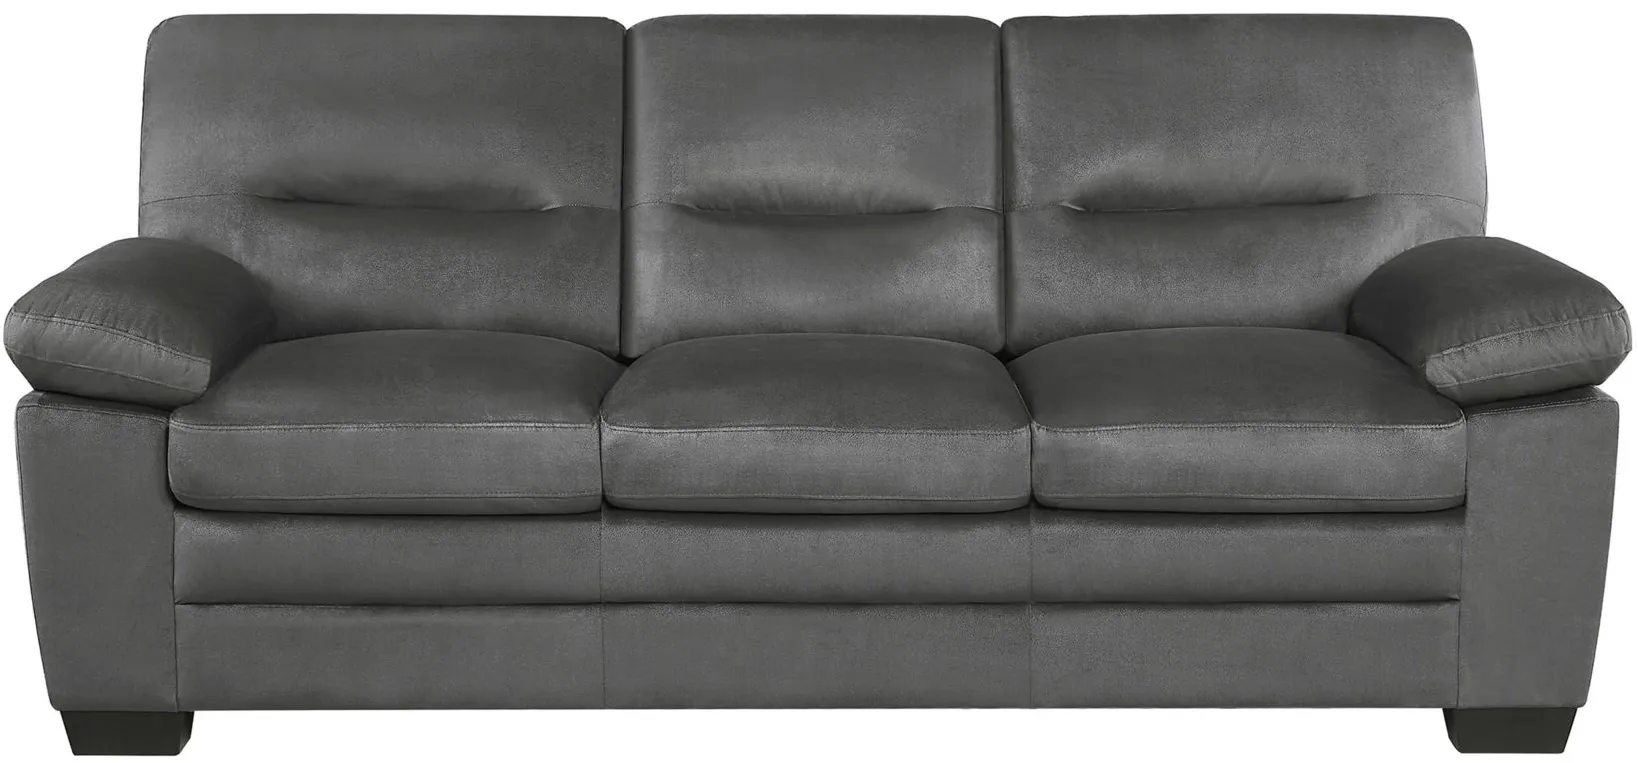 Violette Sofa in Dark Gray by Homelegance